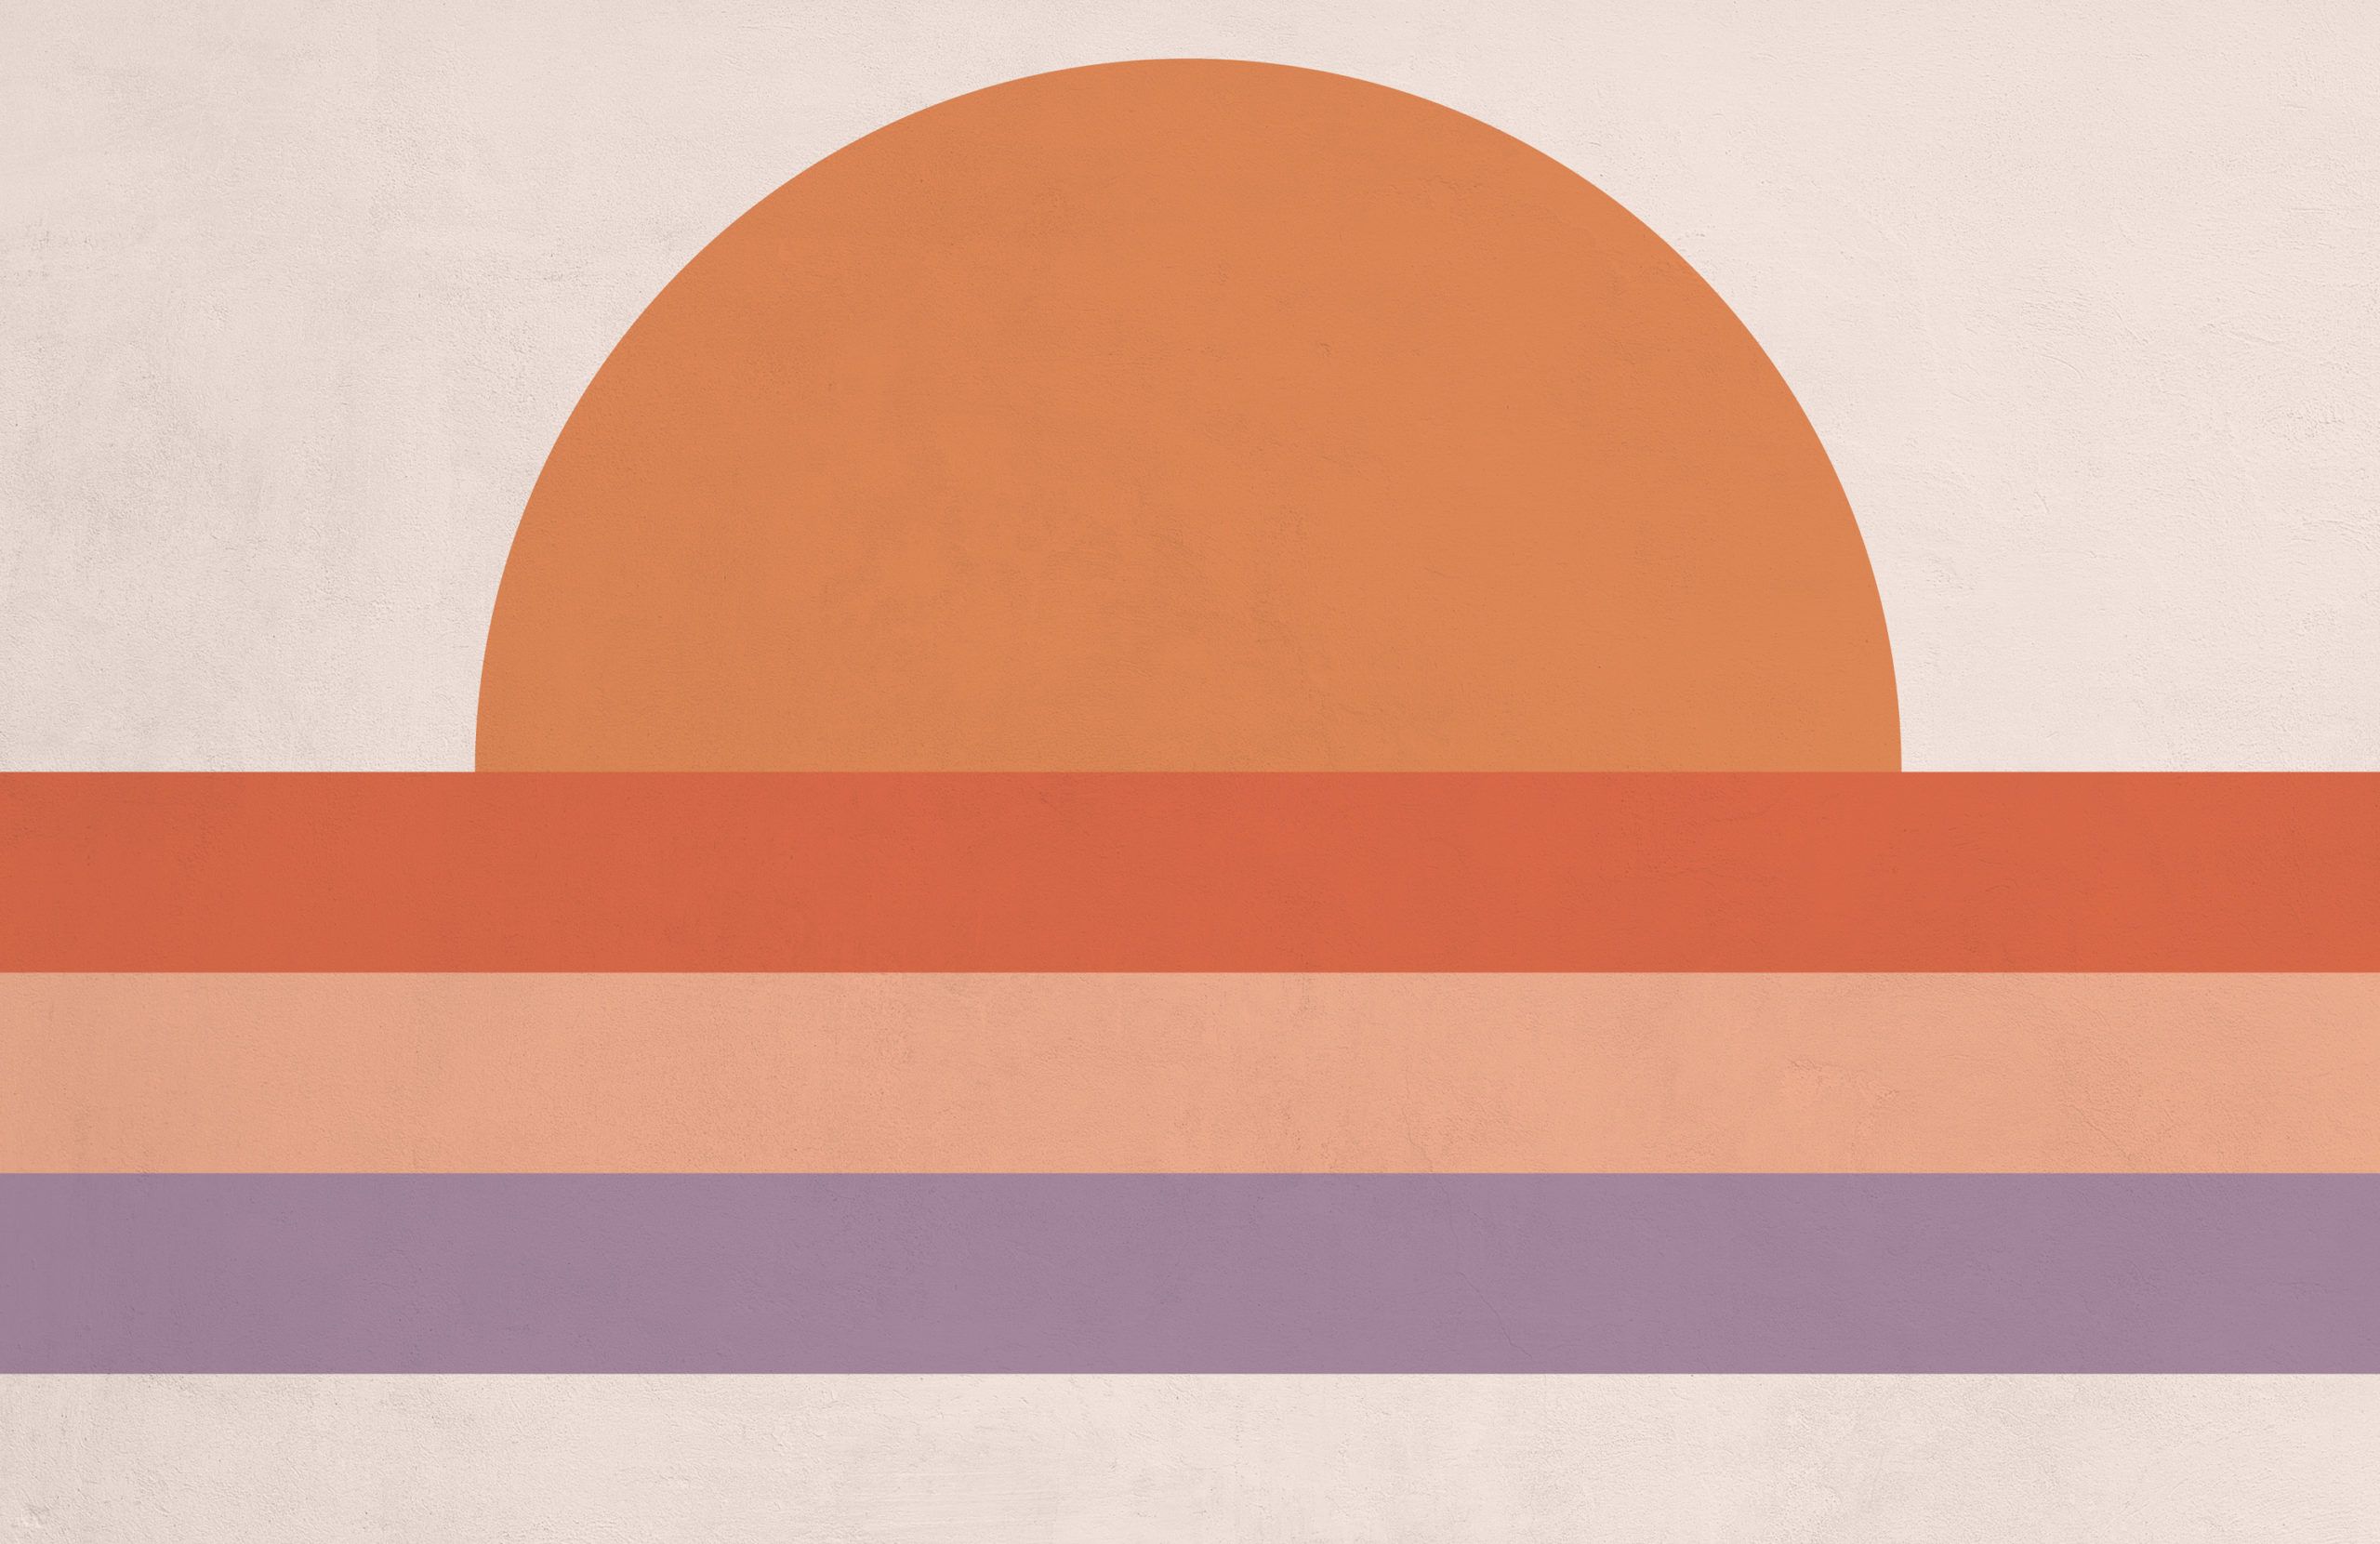  Farbige Kreise Hintergrundbild 2560x1661. Fototapete 70er Jahre Retro Sonnenuntergang Block Farben Orange